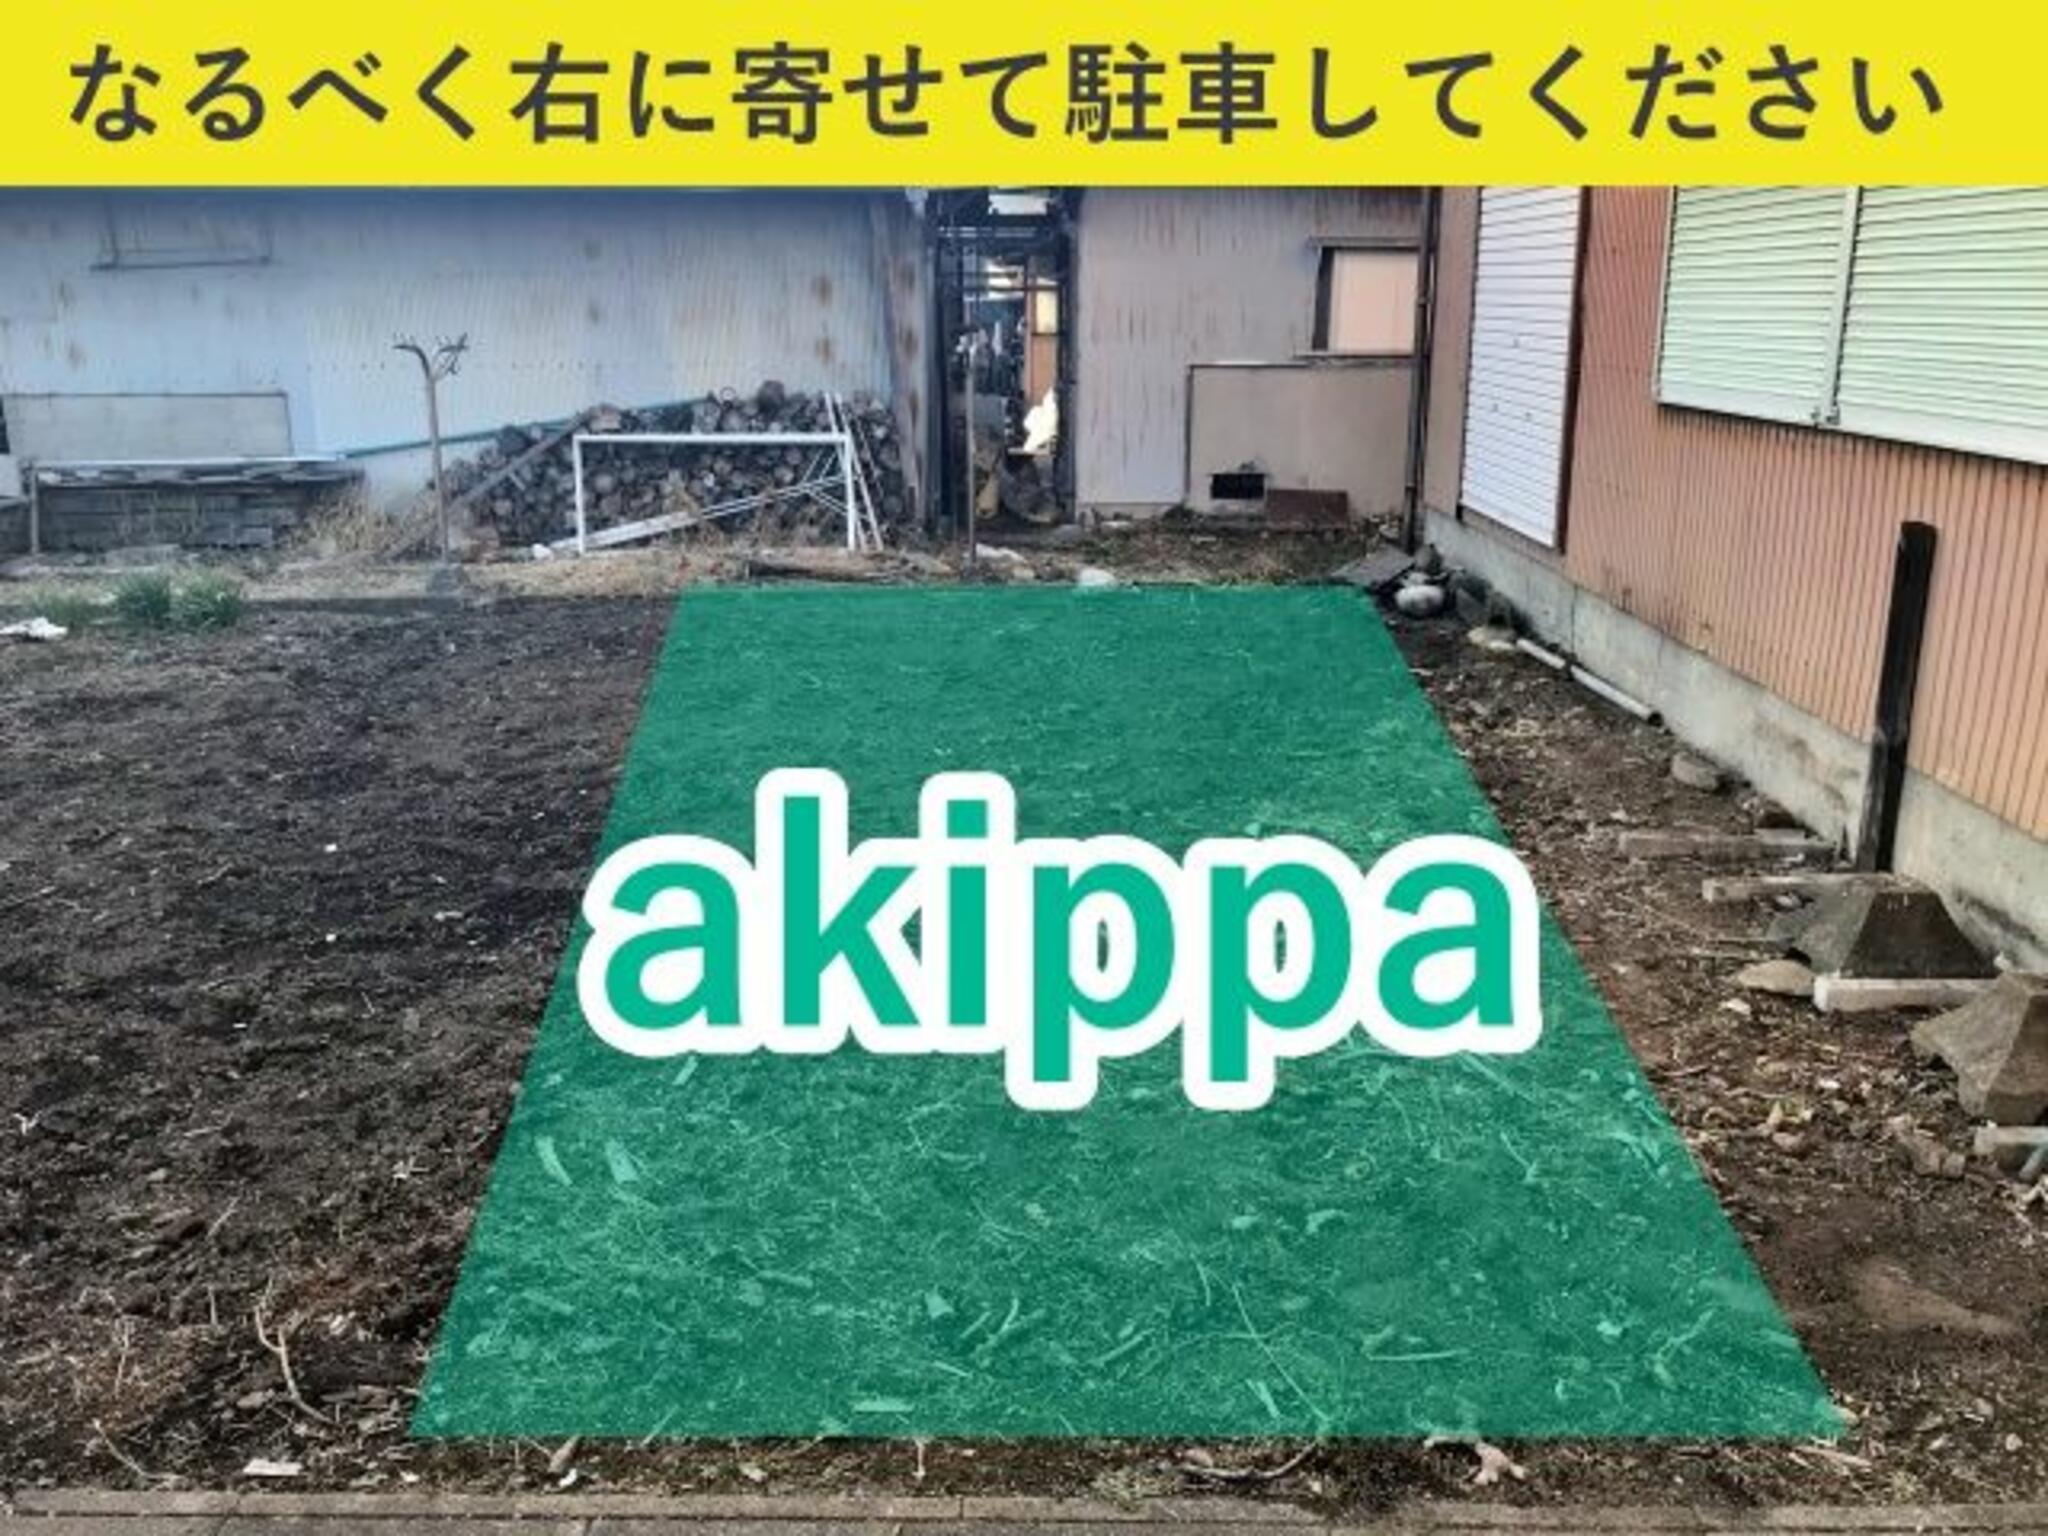 akippa駐車場:愛知県丹羽郡大口町外坪5丁目191の代表写真2